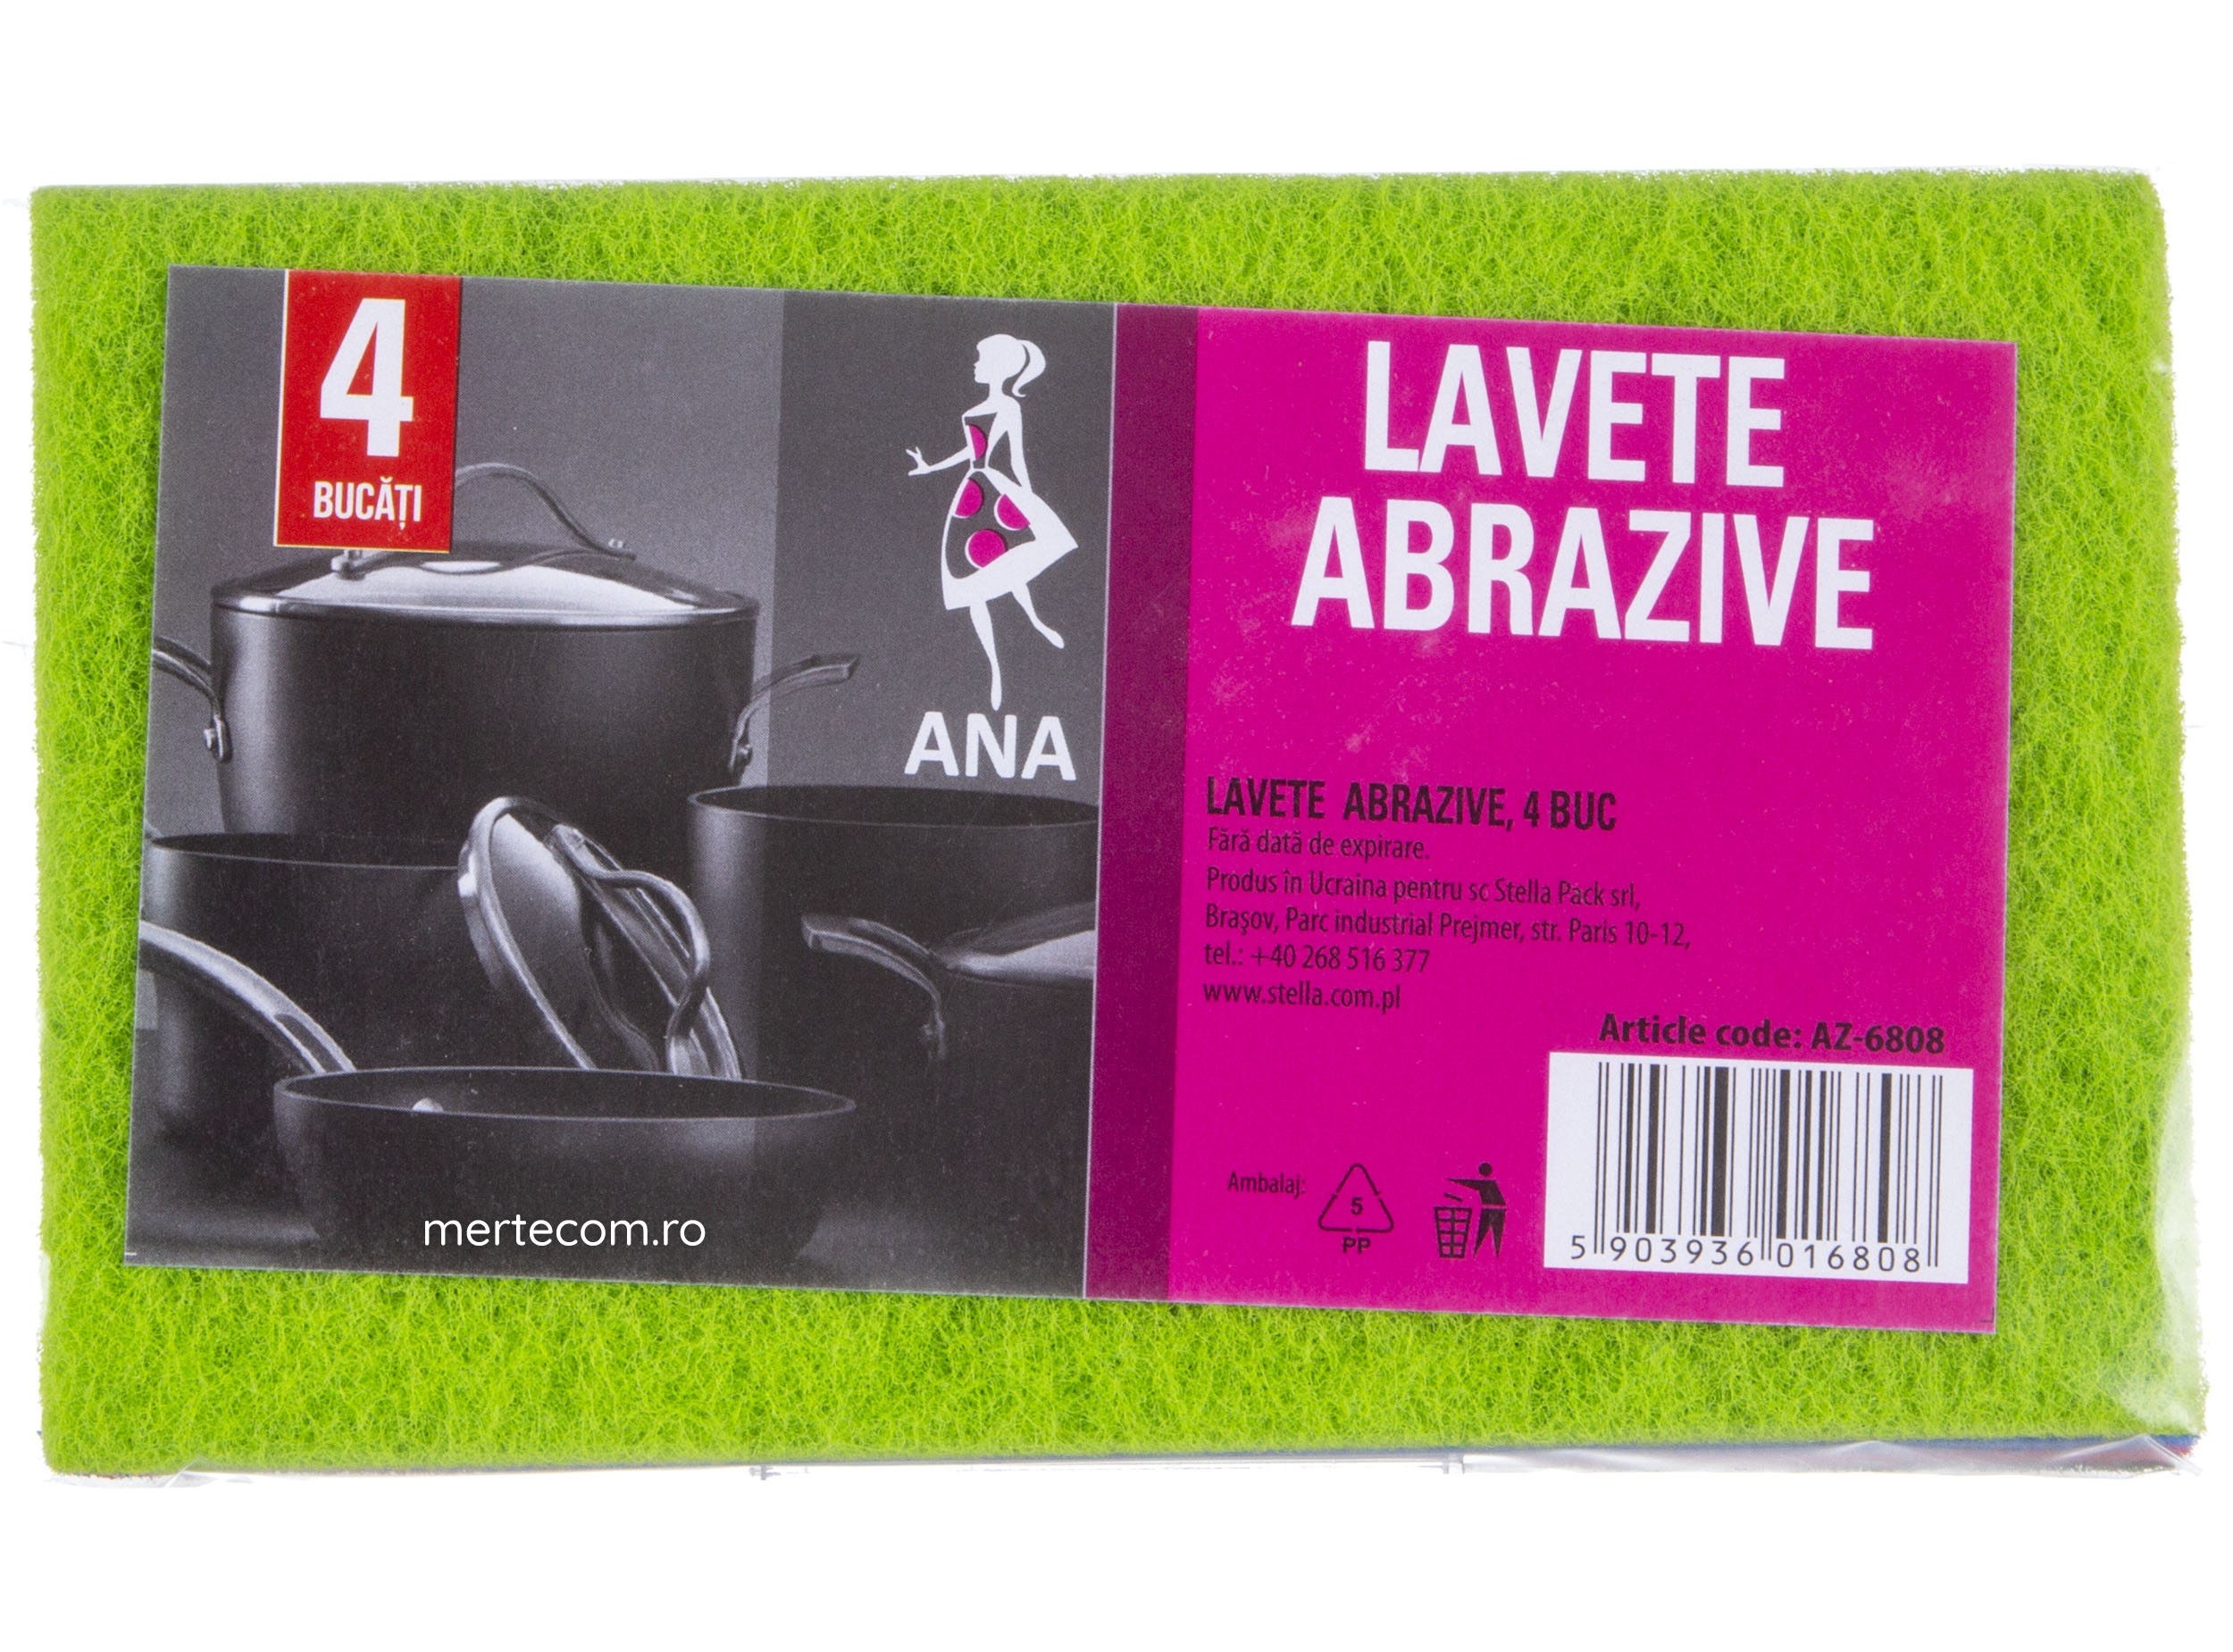 Company America Moist Lavete abrazive Ana 4bucati - Mertecom.ro